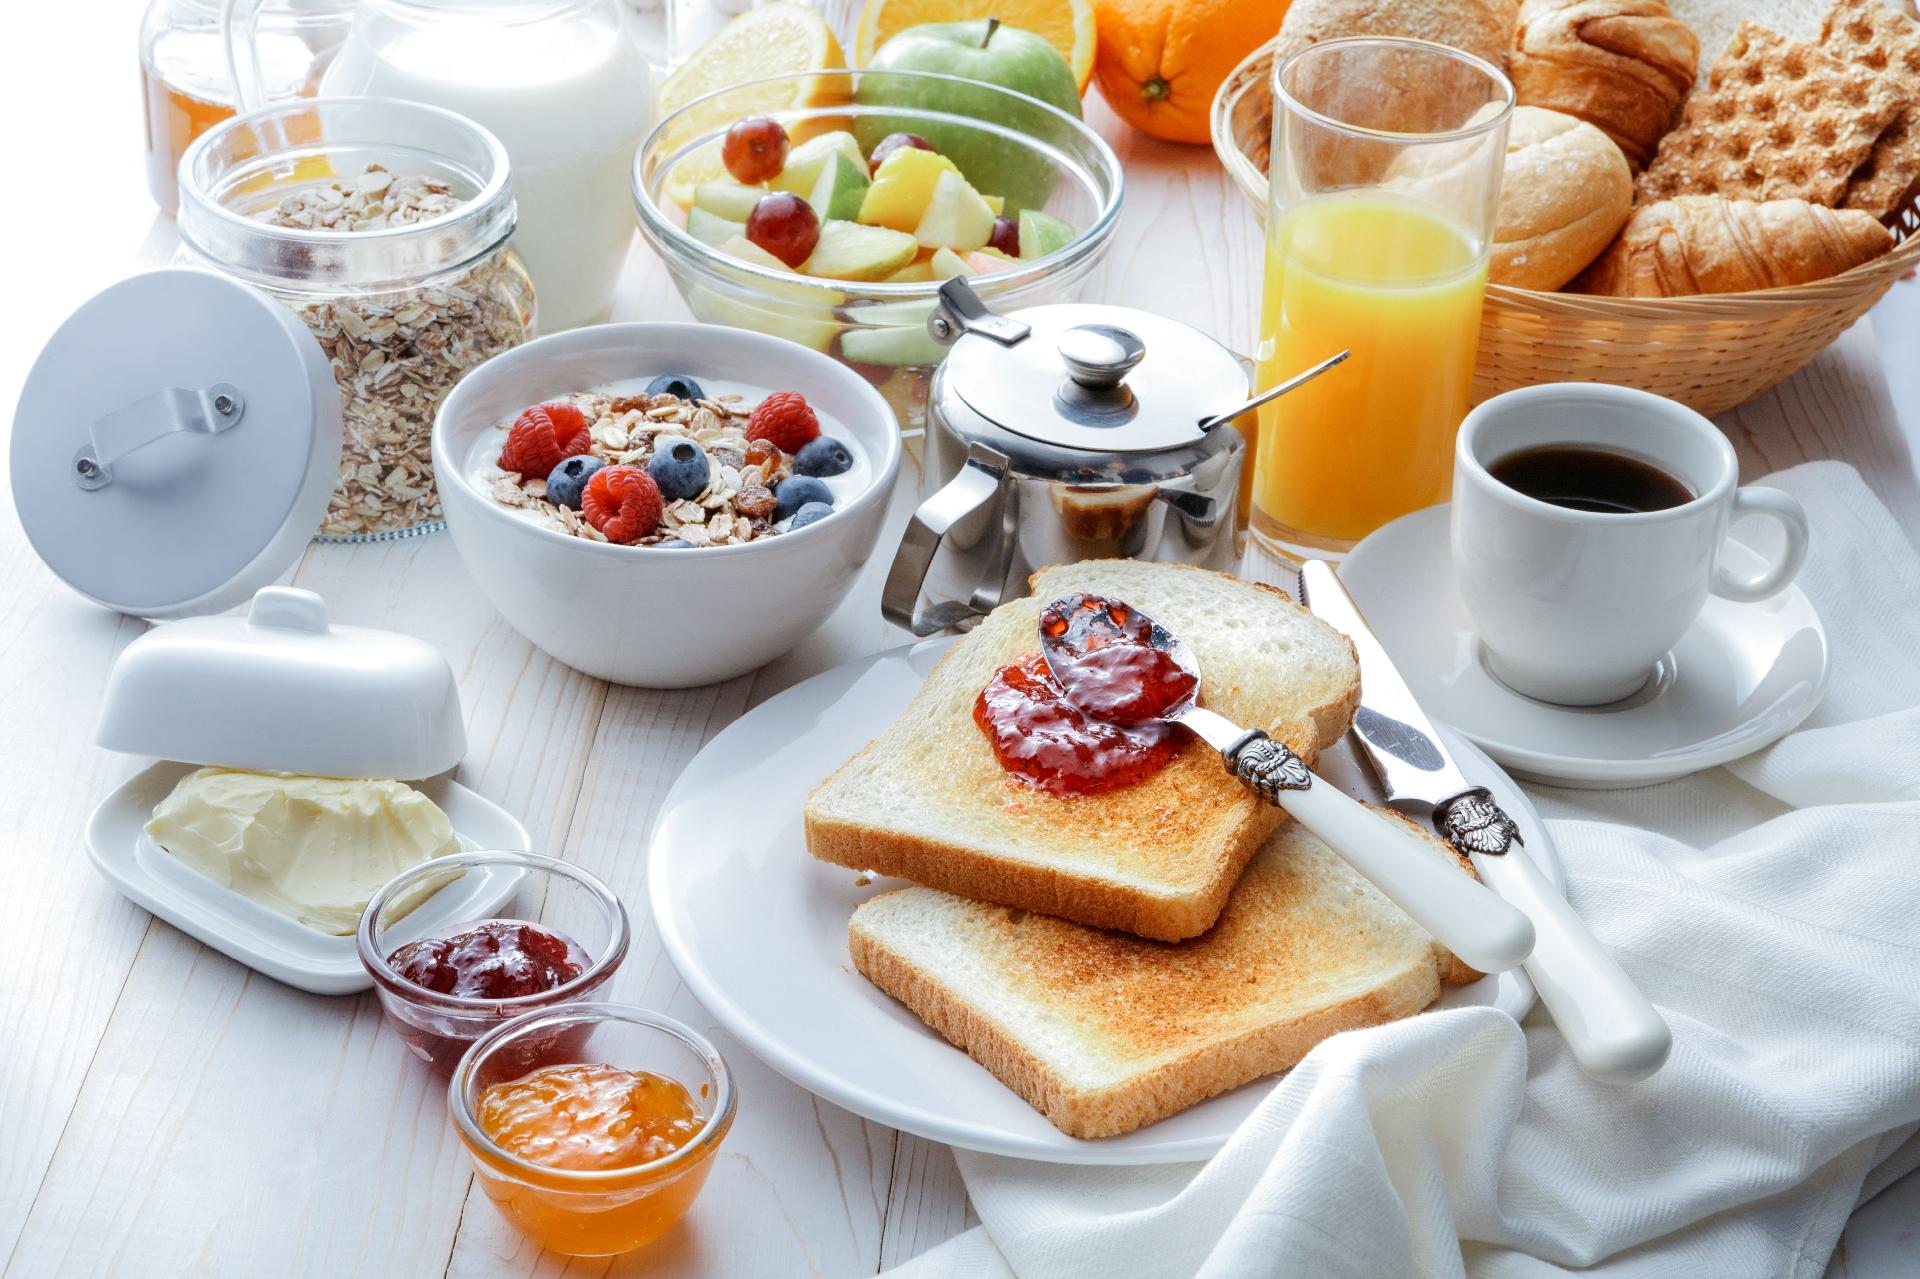 Have a coffee have breakfast. Завтрак. Приятного завтрака. Красивый завтрак. Утренний завтрак.